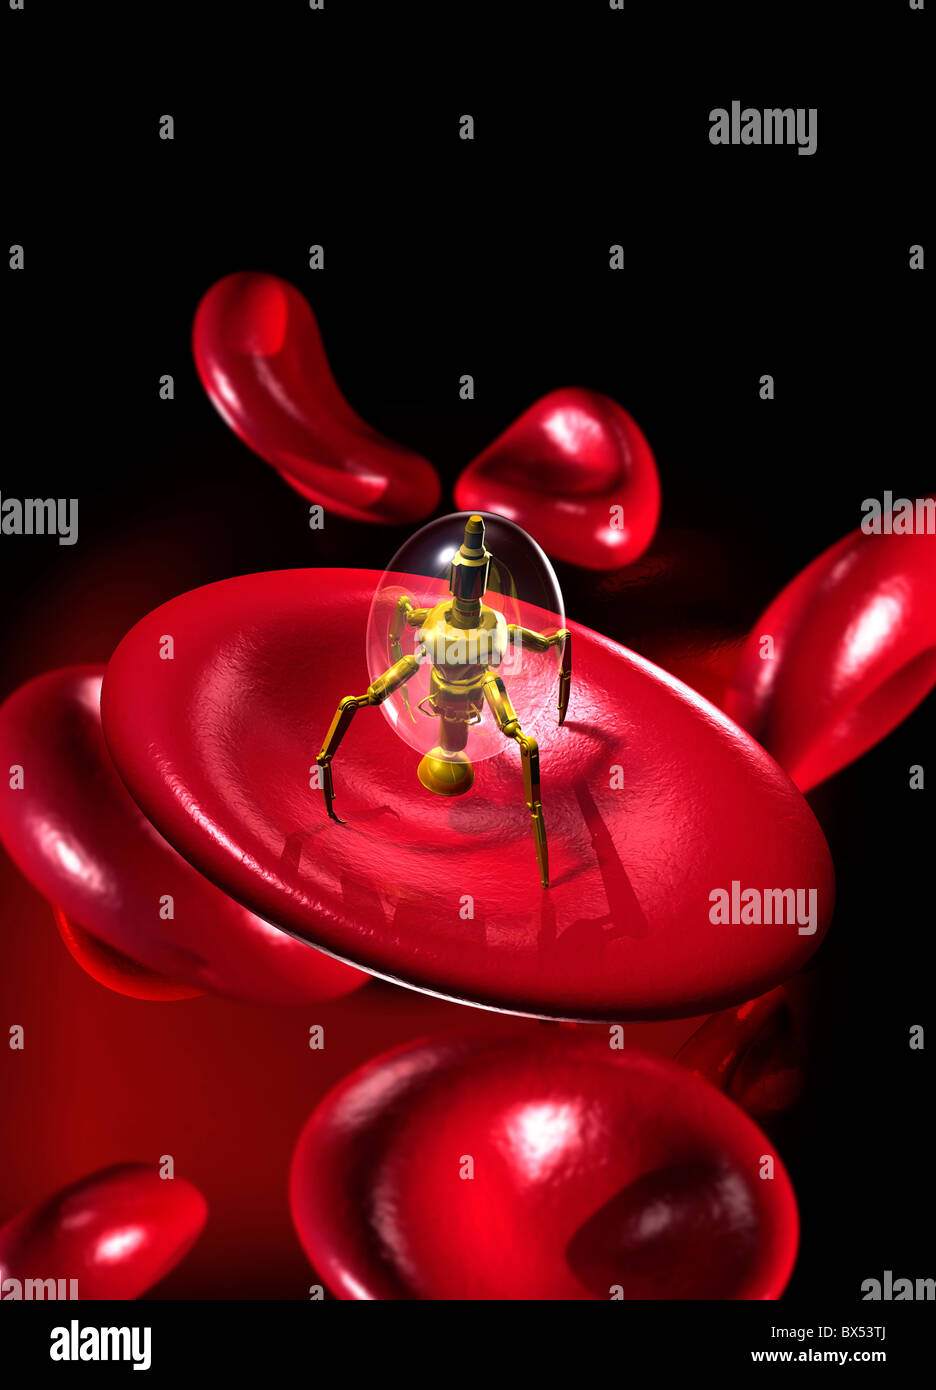 Medical nanorobot, artwork Stock Photo